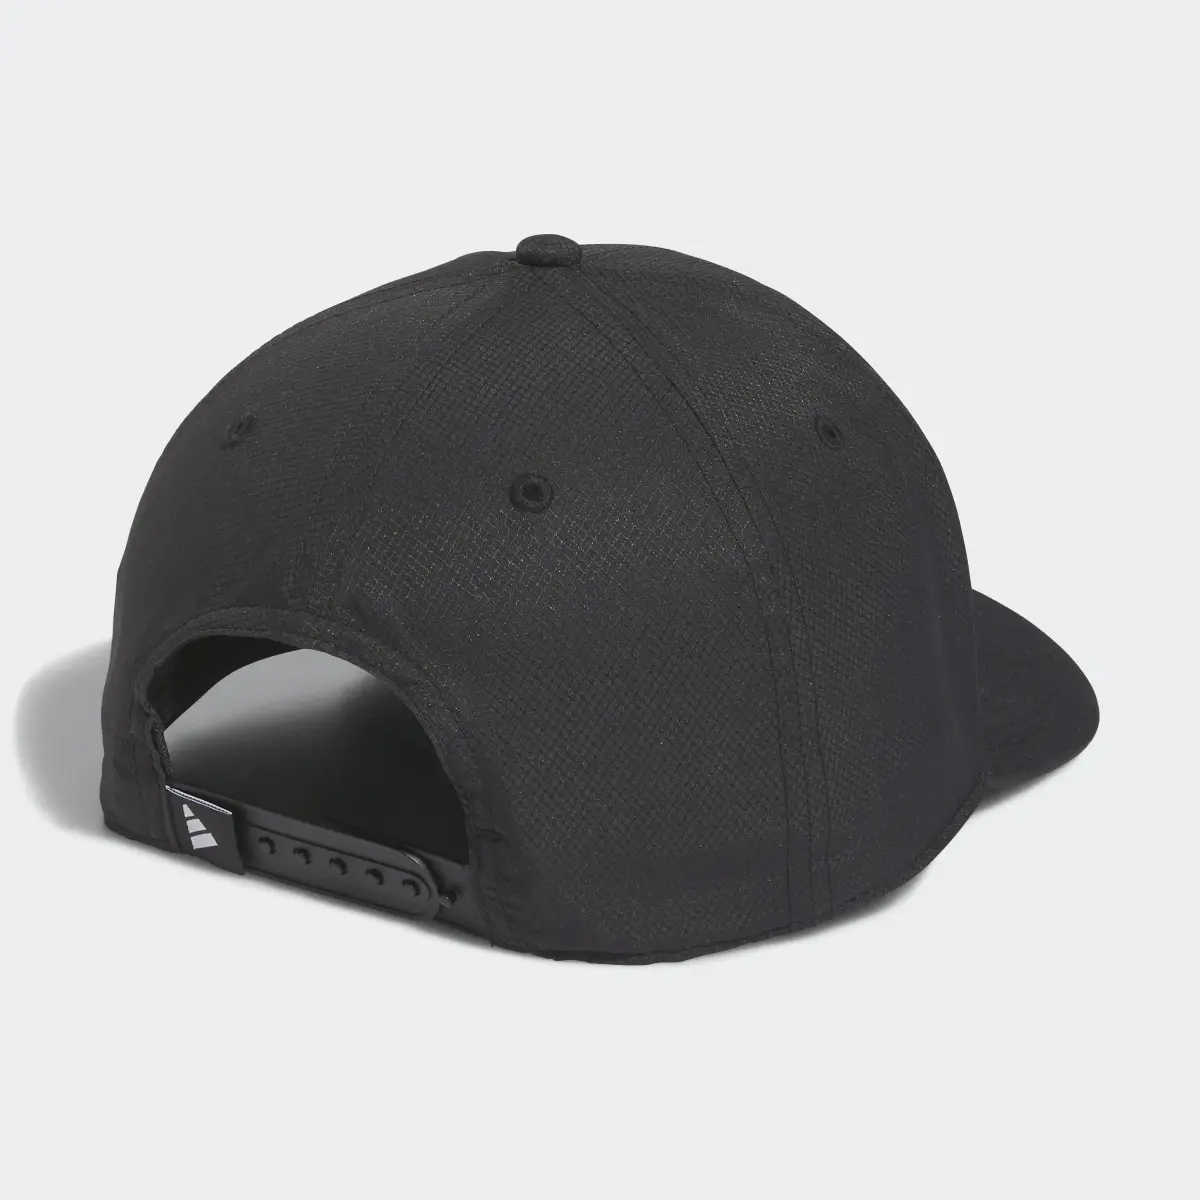 Adidas Tour Snapback Hat. 3